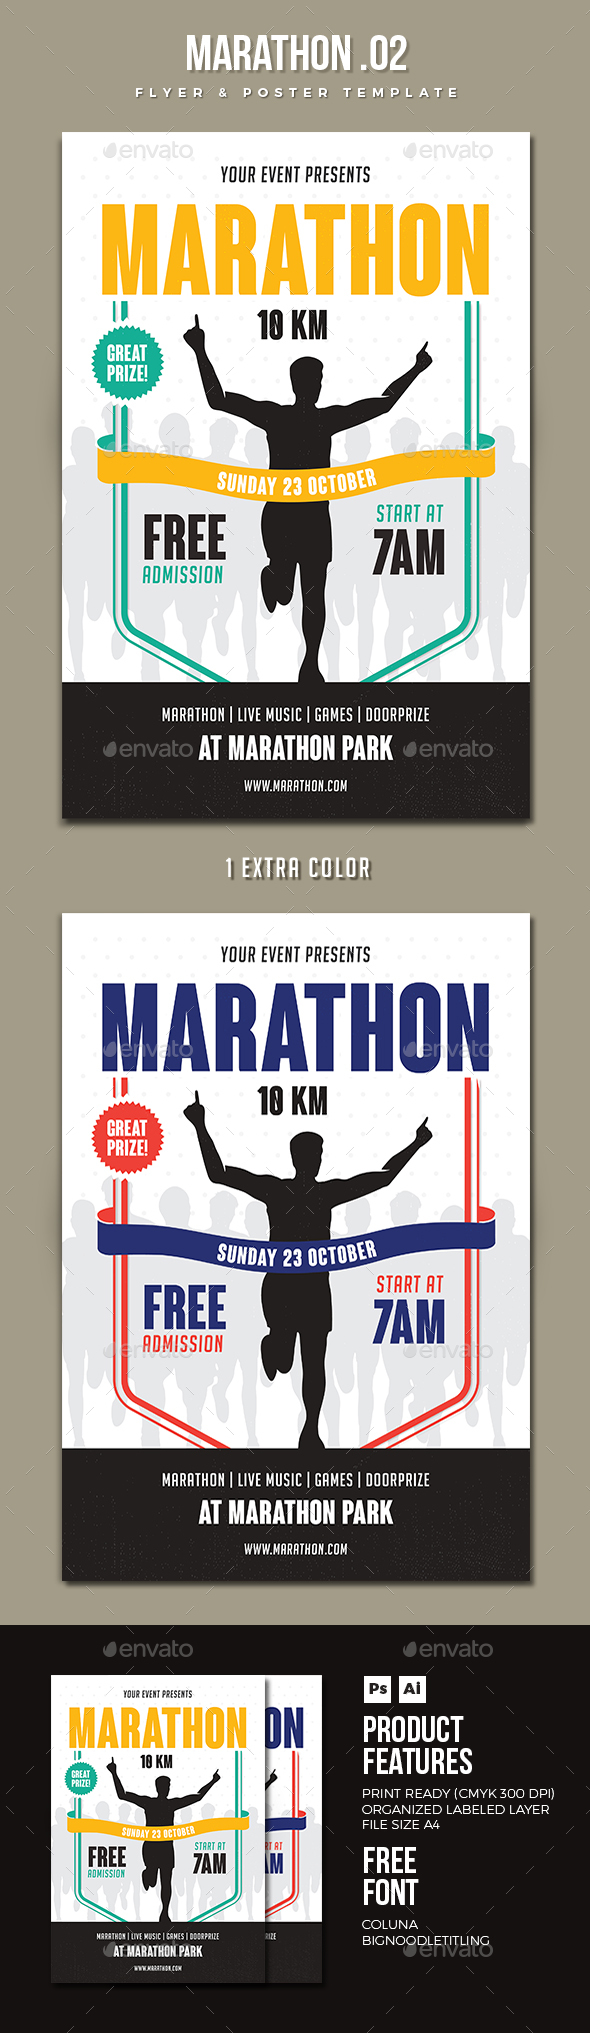 download marathon events near me